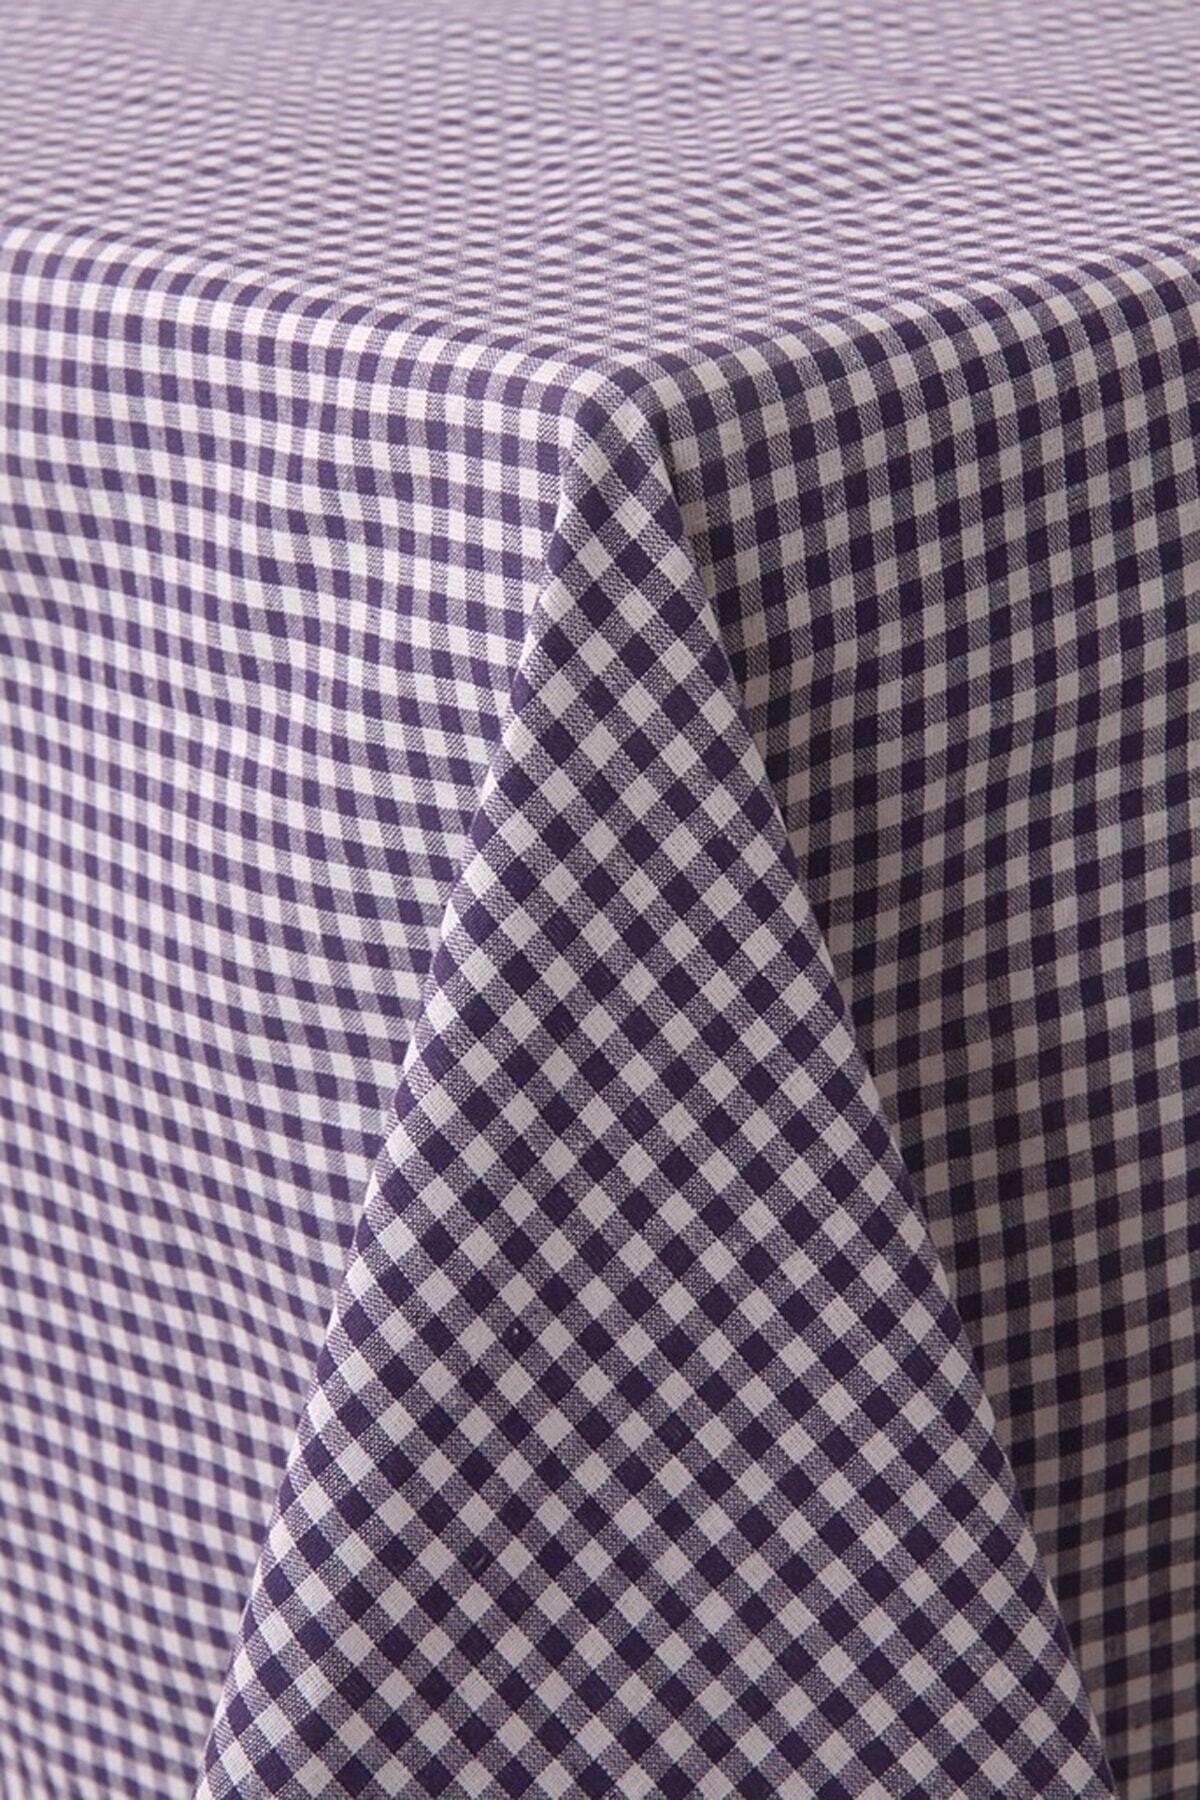 Piti Checkered Purple Table Cloth Cotton, Authentic Table Cover, Picnic Cover - Swordslife